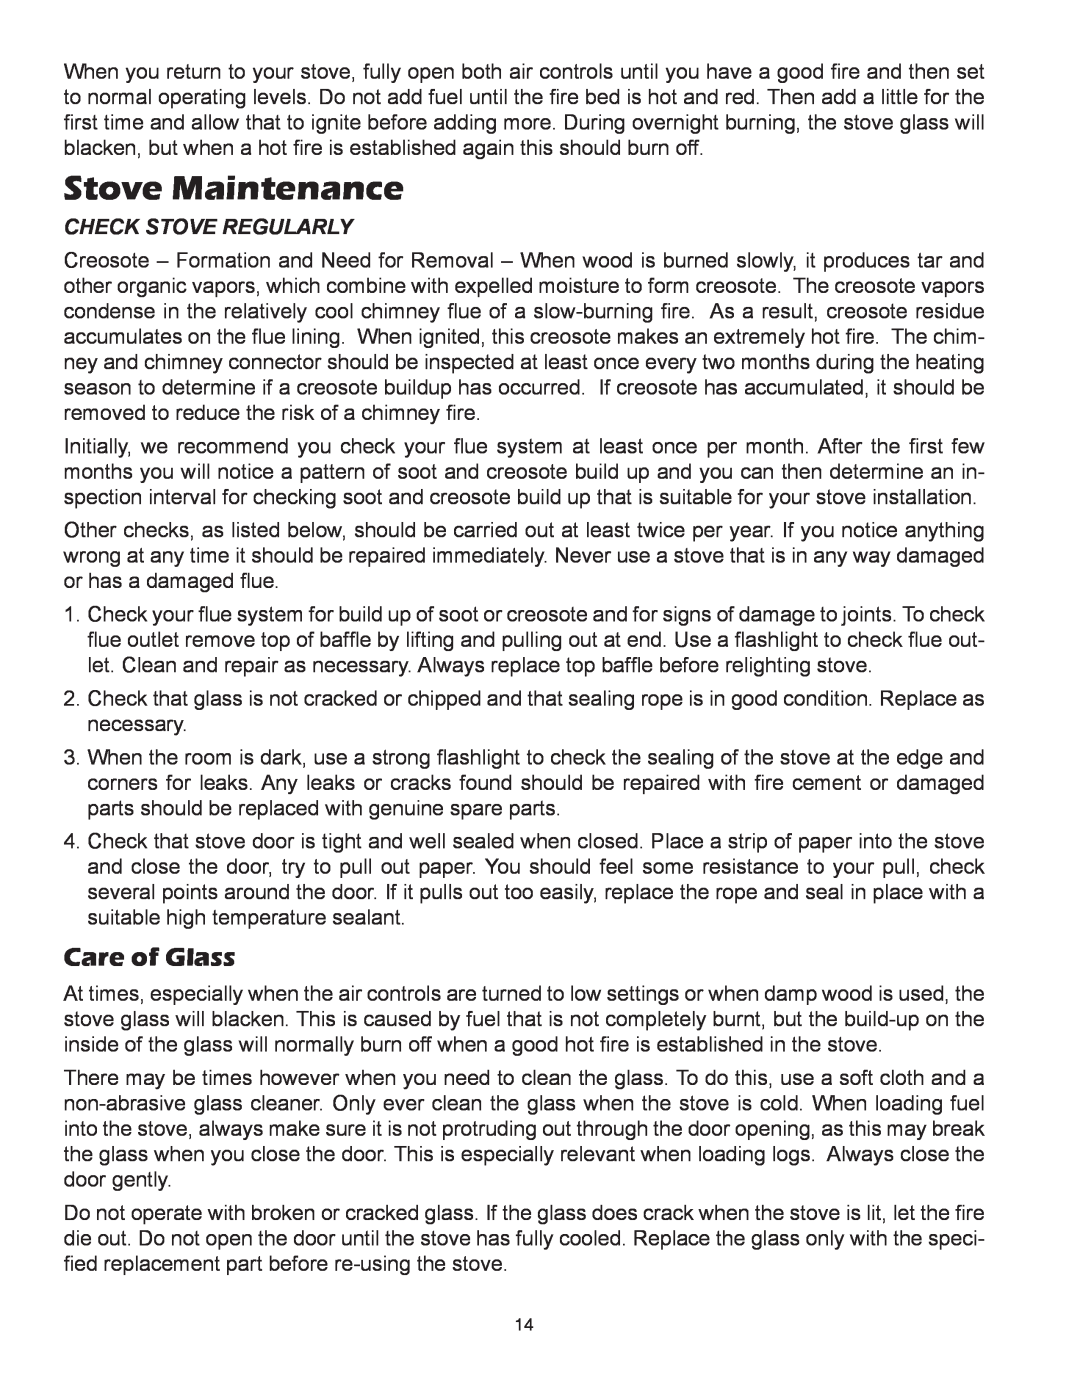 United States Stove 3600PB, 3800PB owner manual Stove Maintenance, Care of Glass, Check Stove Regularly 